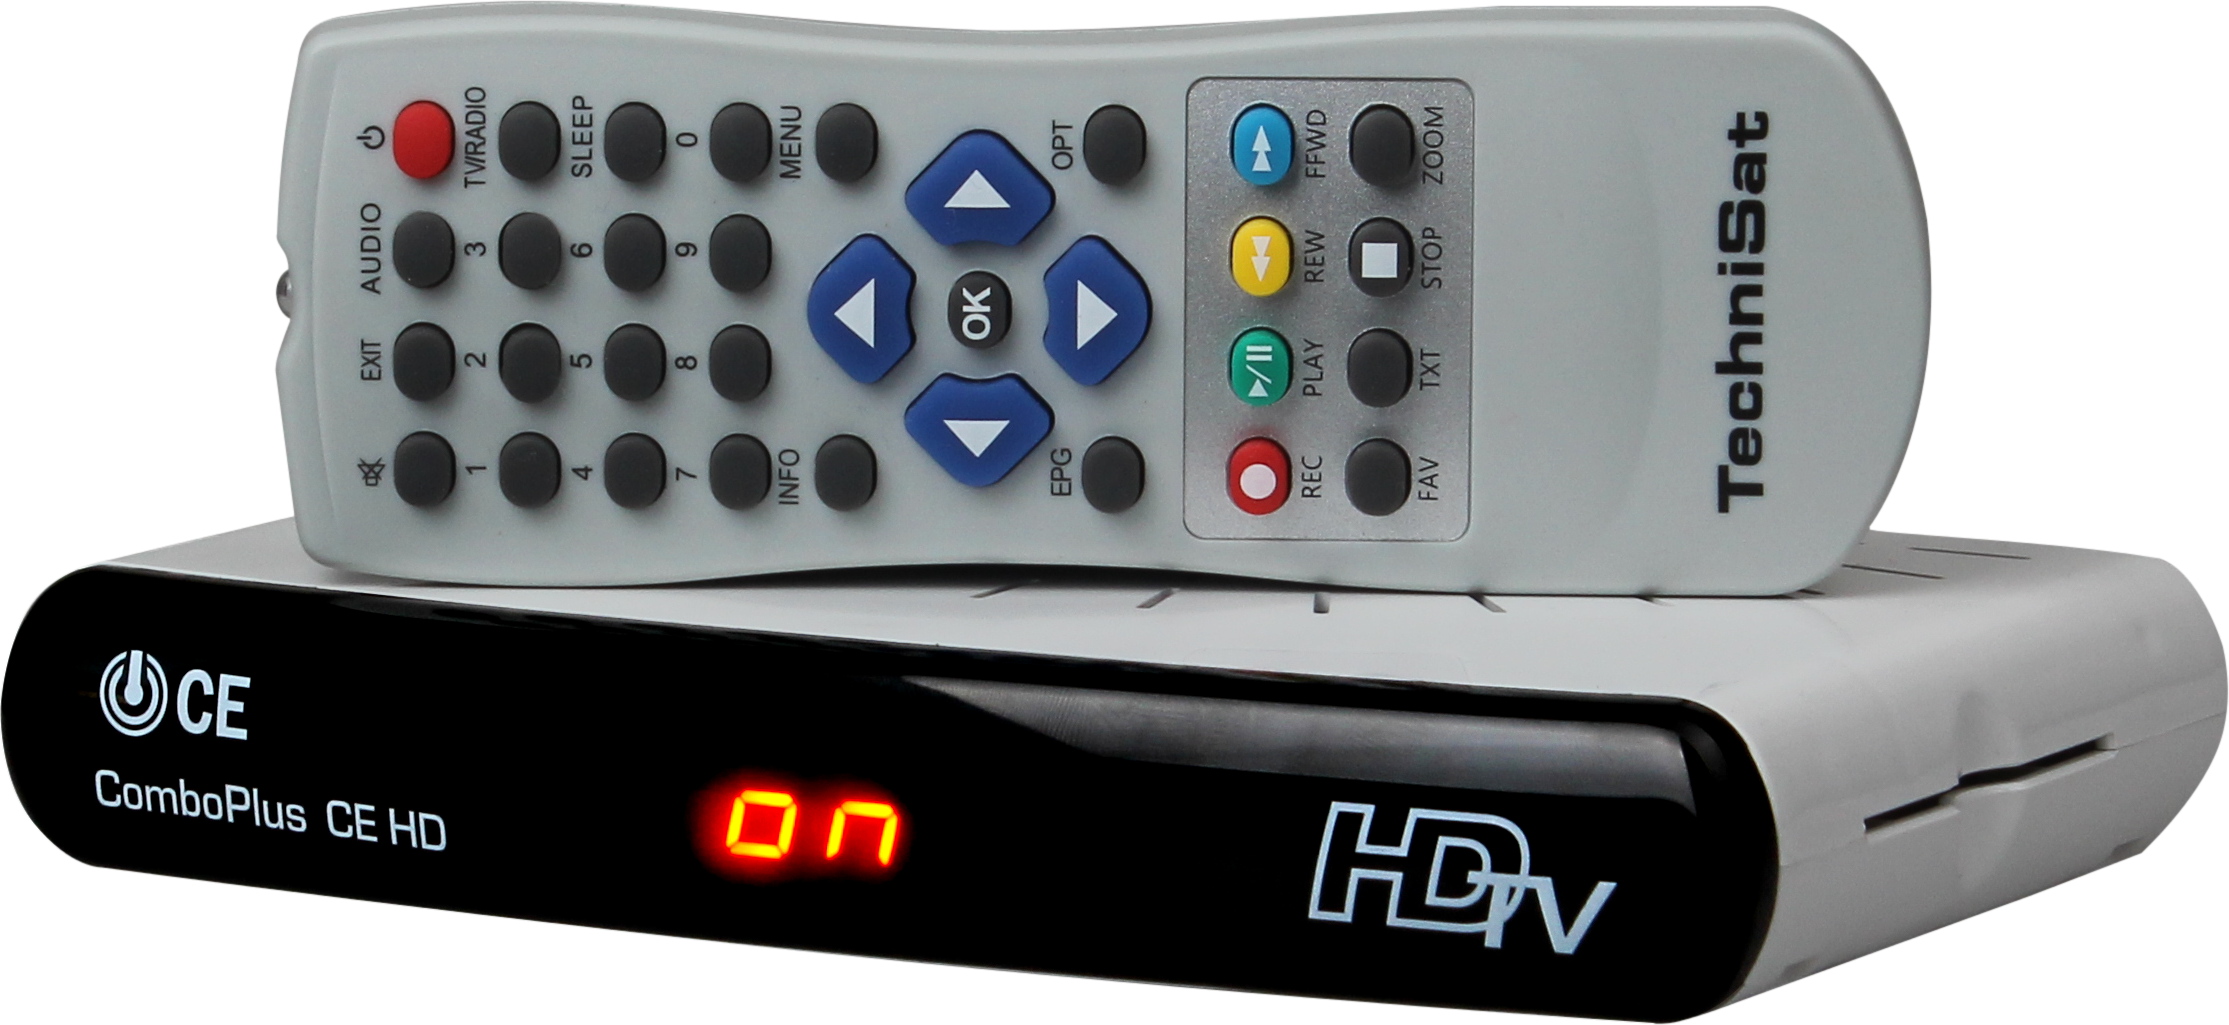 TUNER TECHNISAT
COMBOBOX PLUS DVB-T
SMART HD+
HDMI, USB